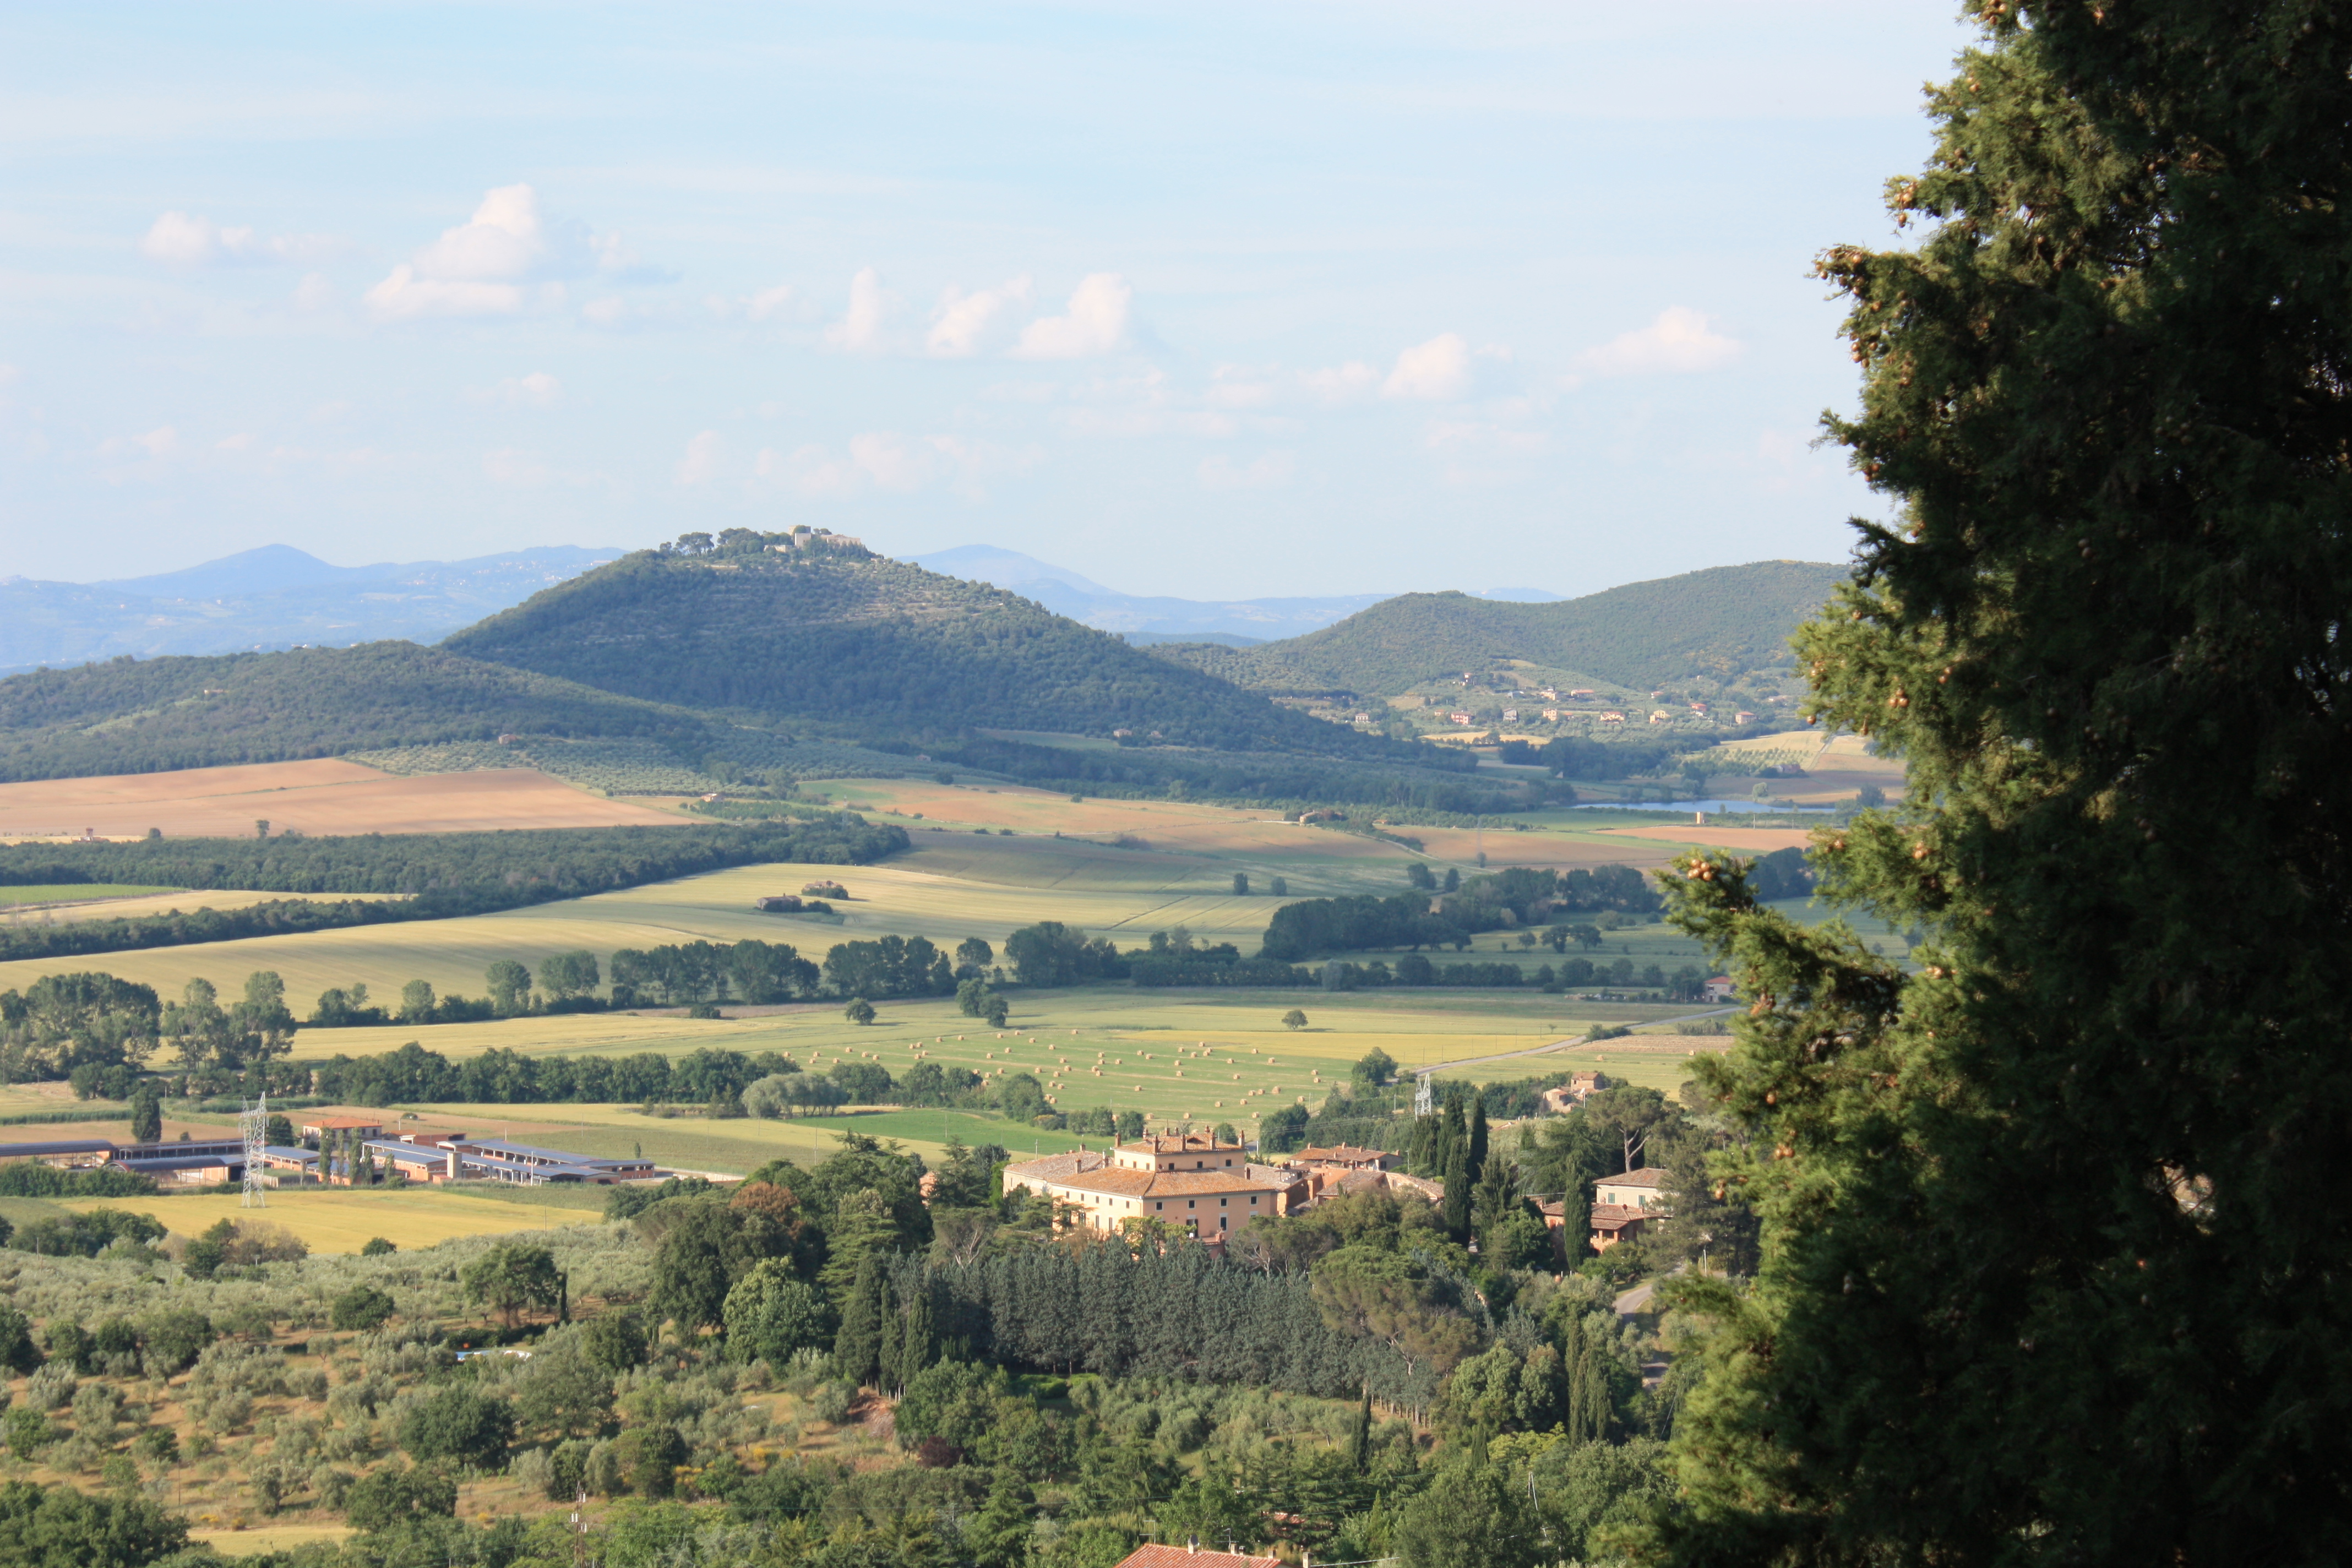 Umbria's beautiful landscape